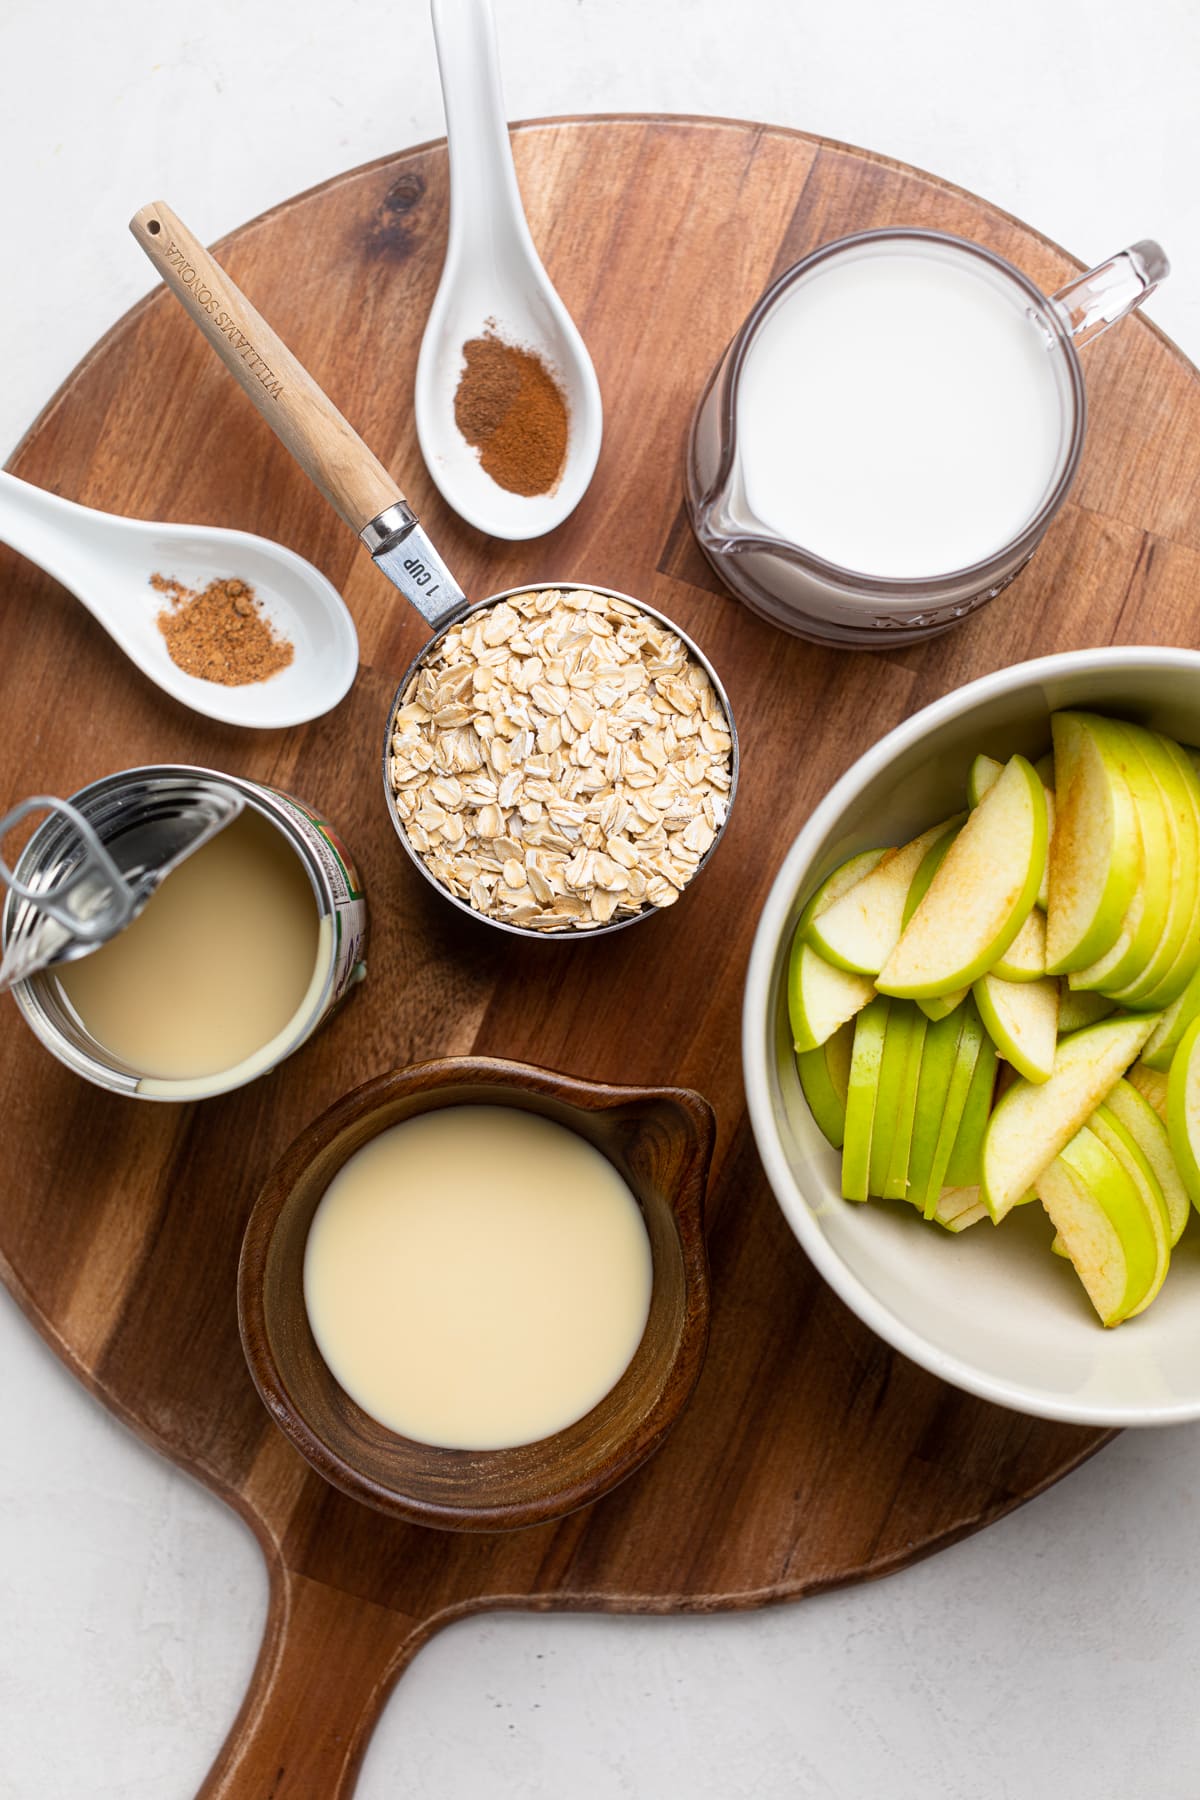 Ingredients for Apple Cinnamon Oatmeal Porridge including oats, almond milk, and condensed milk